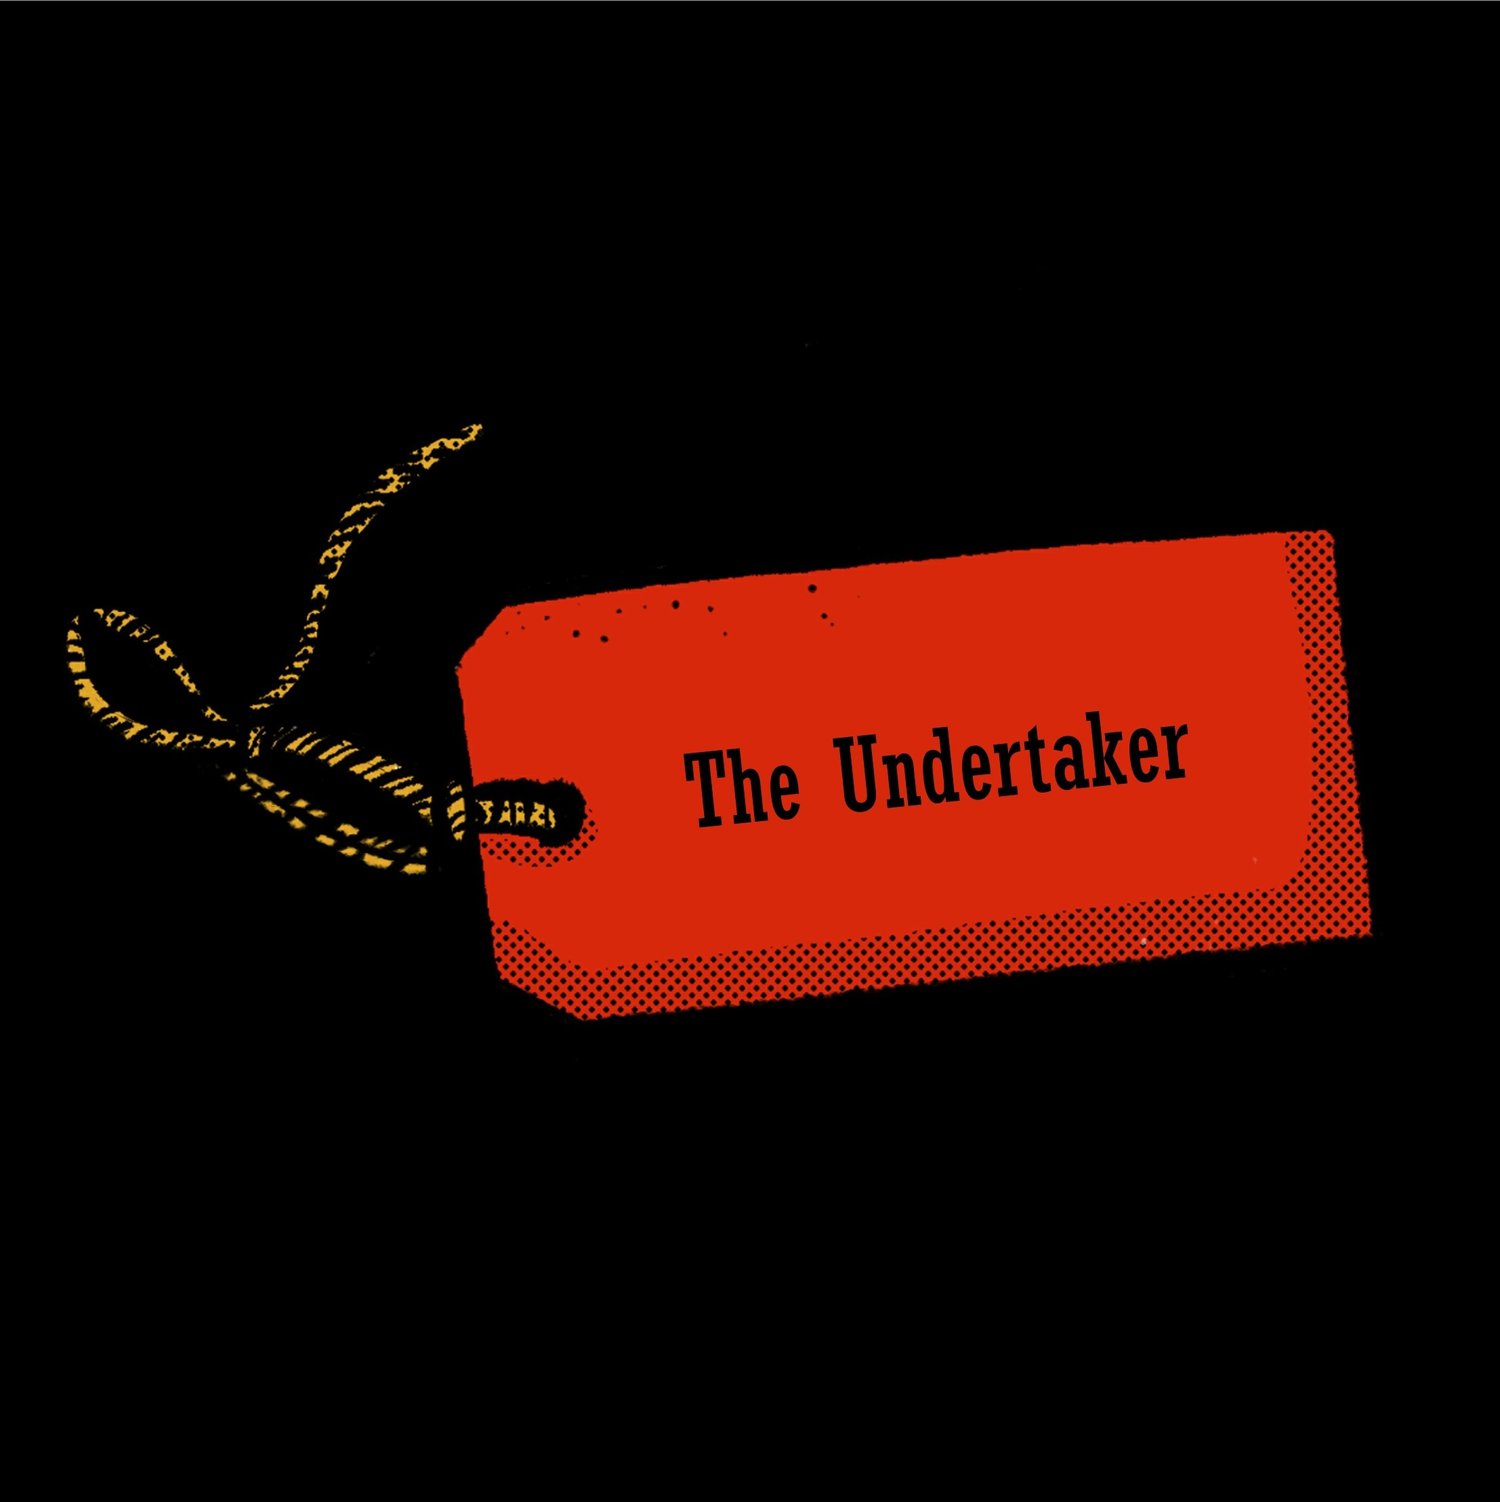 Episode 13: The Undertaker